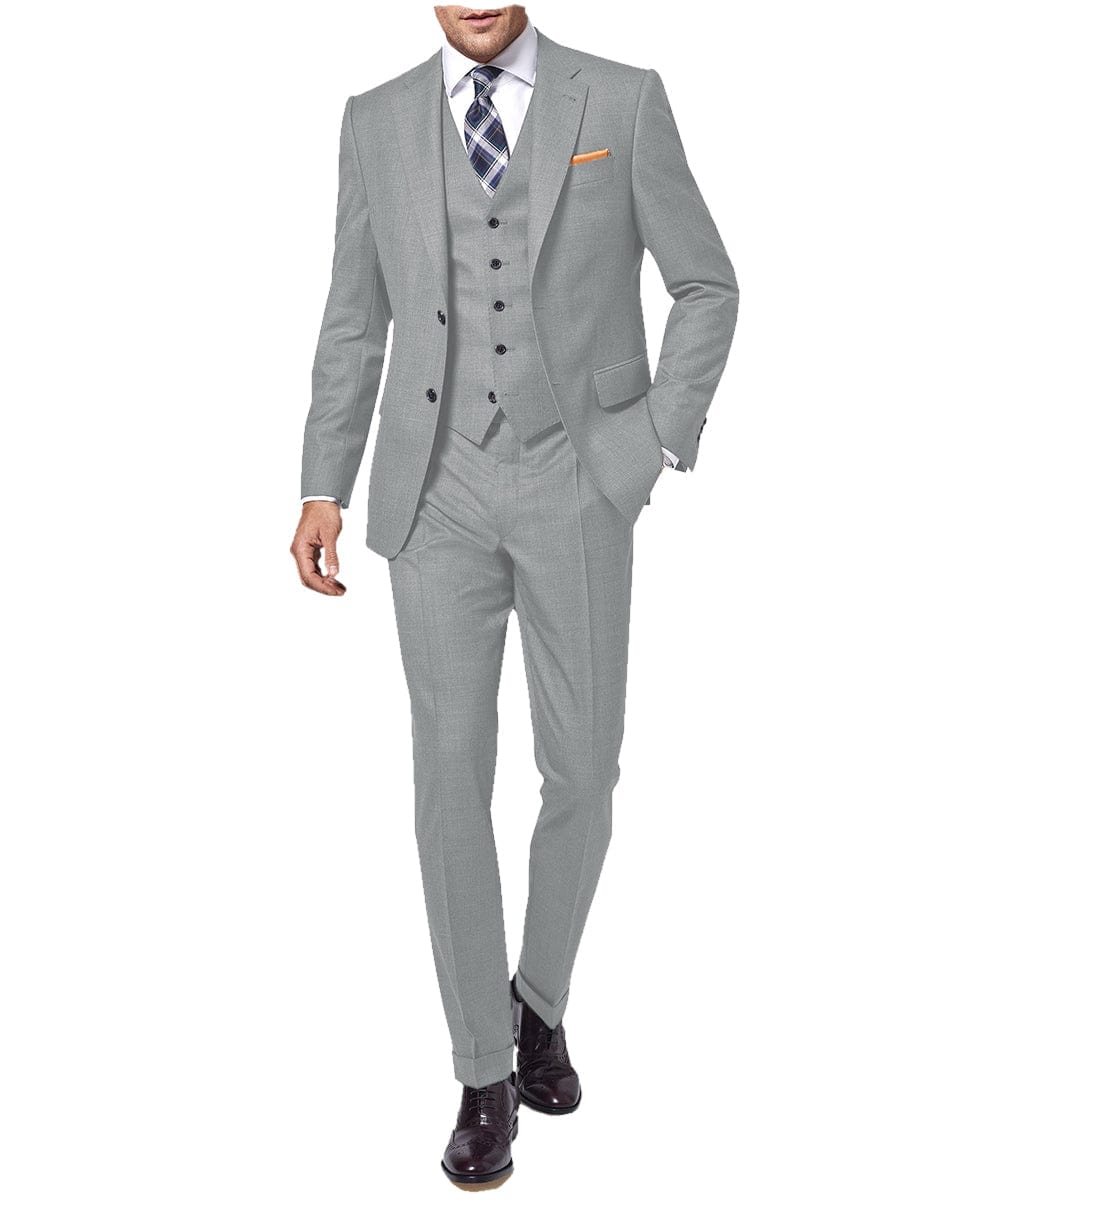 ceehuteey Formal Men's Regular Fashion Notch Lapel Blazer 3 Pieces (Blazer+Vest+Pants)